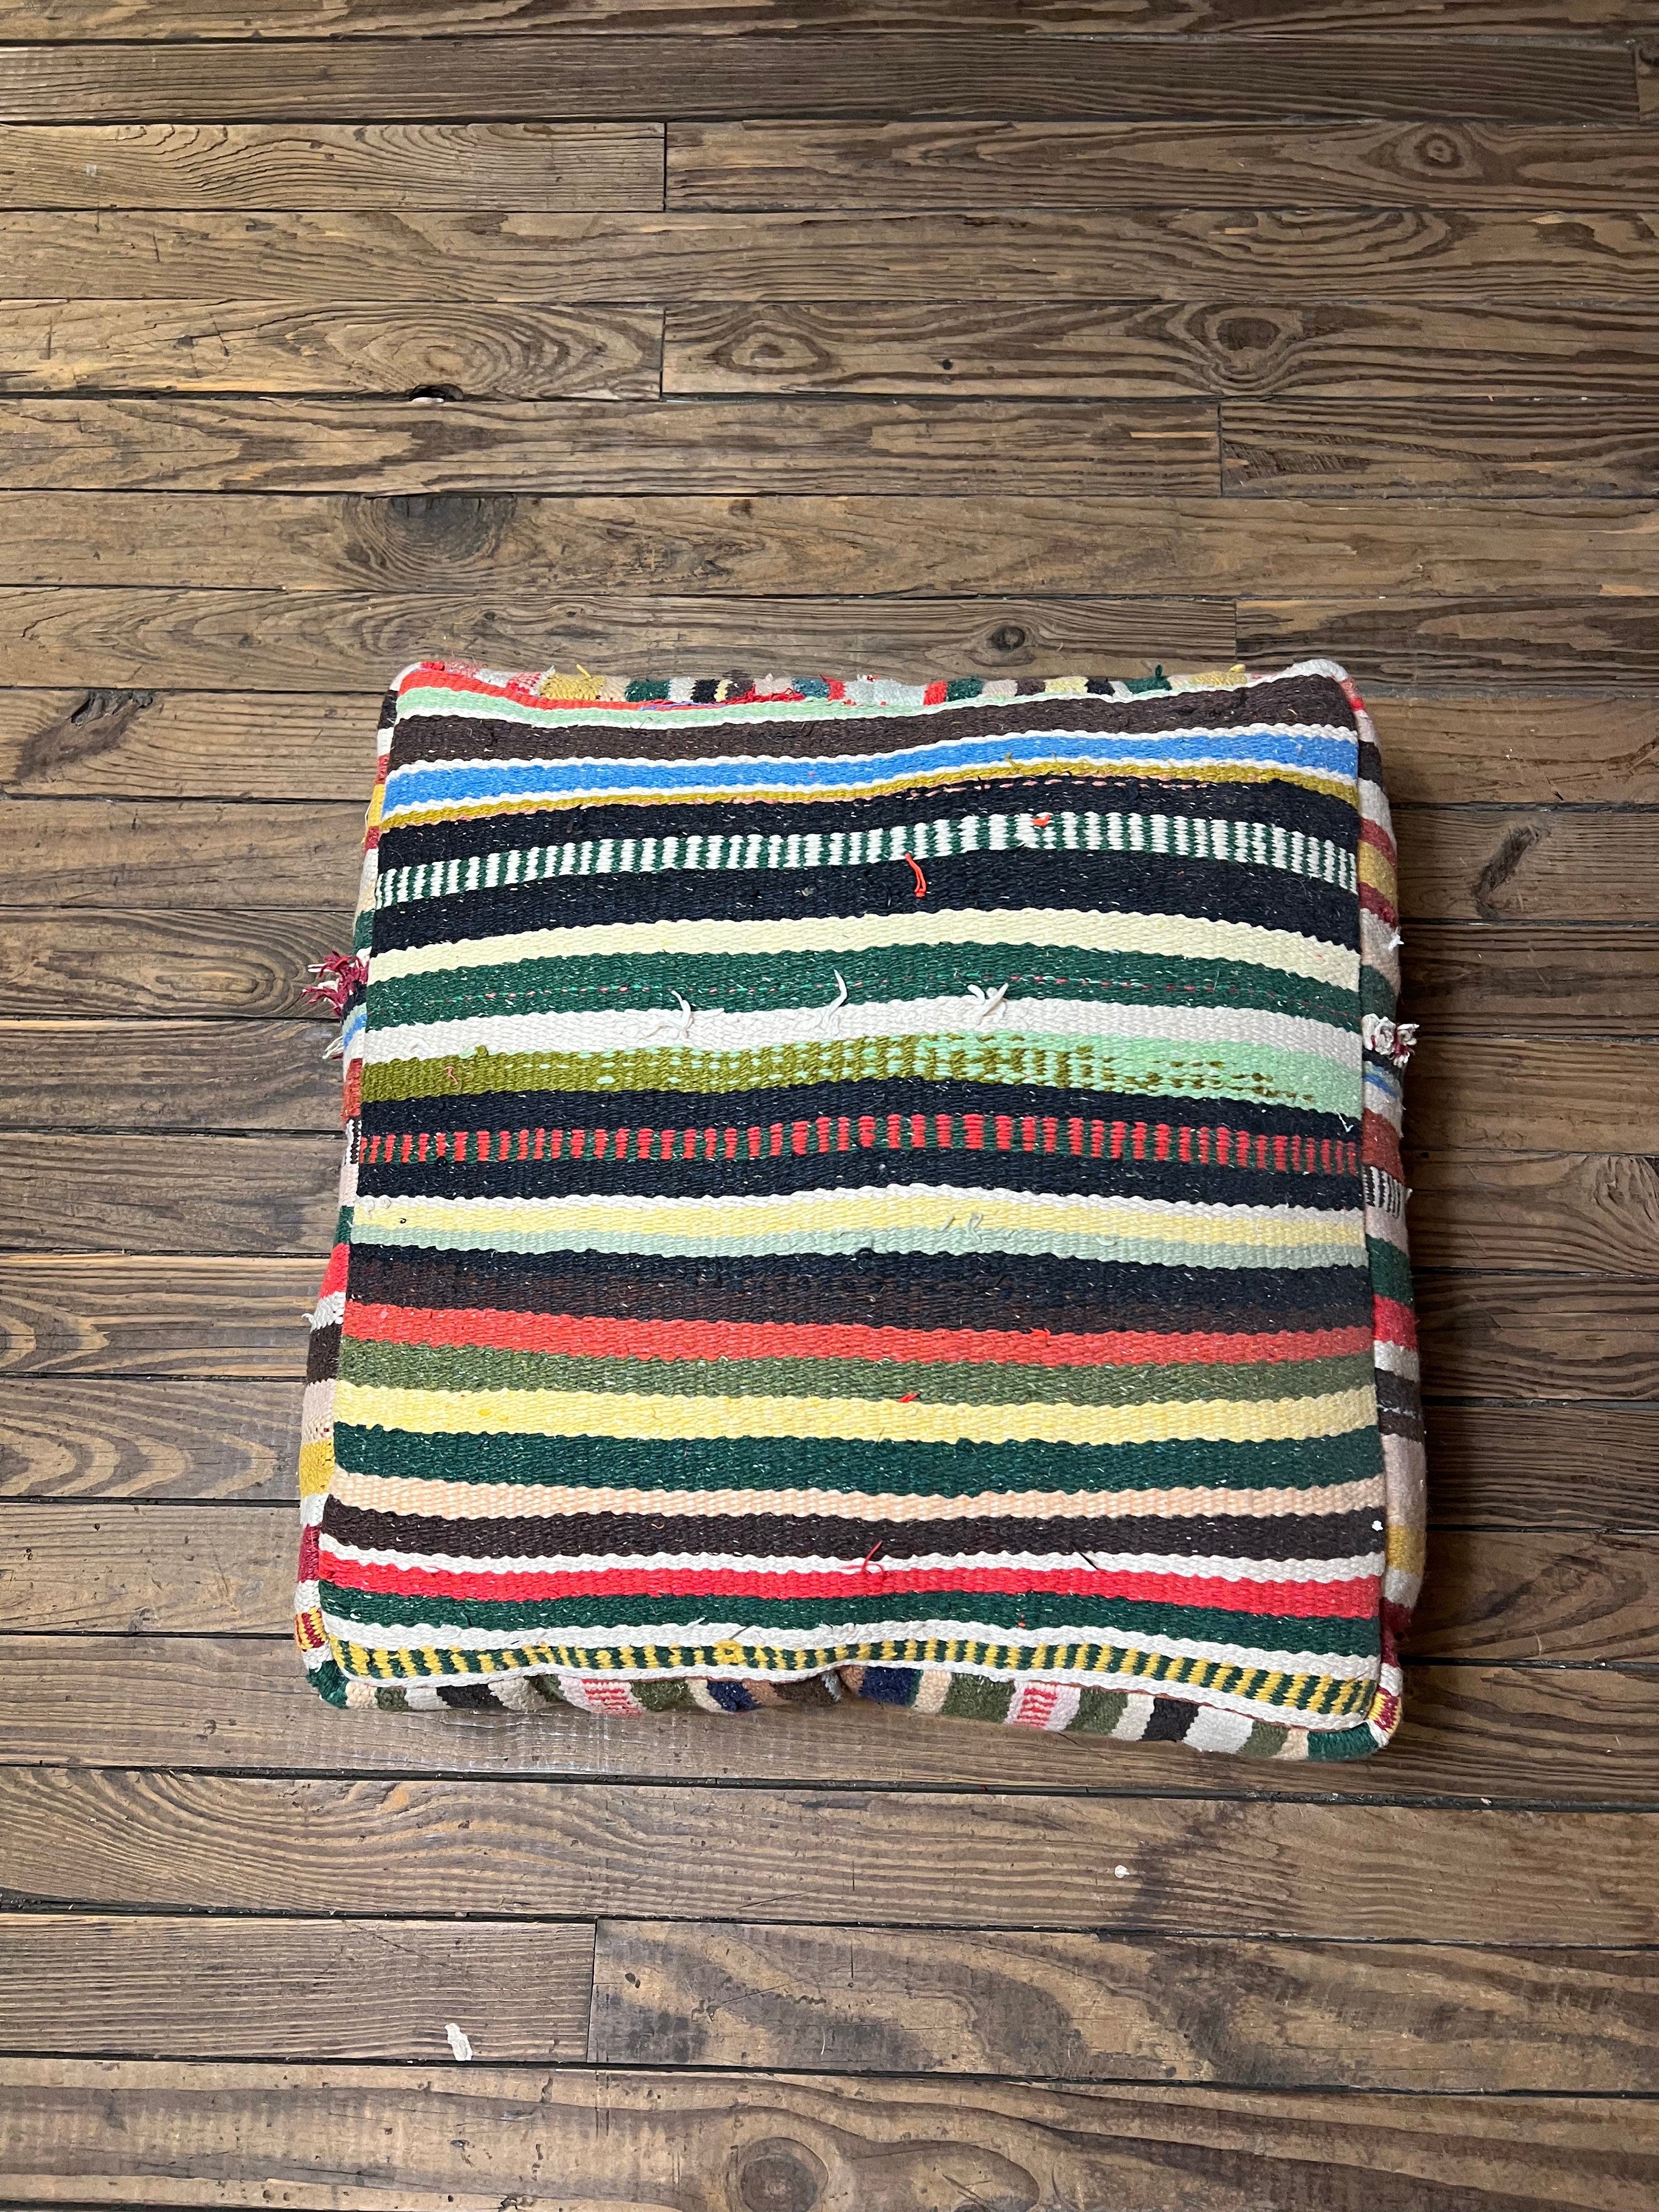 Moroccan Floor Cushion Multi Colored 4